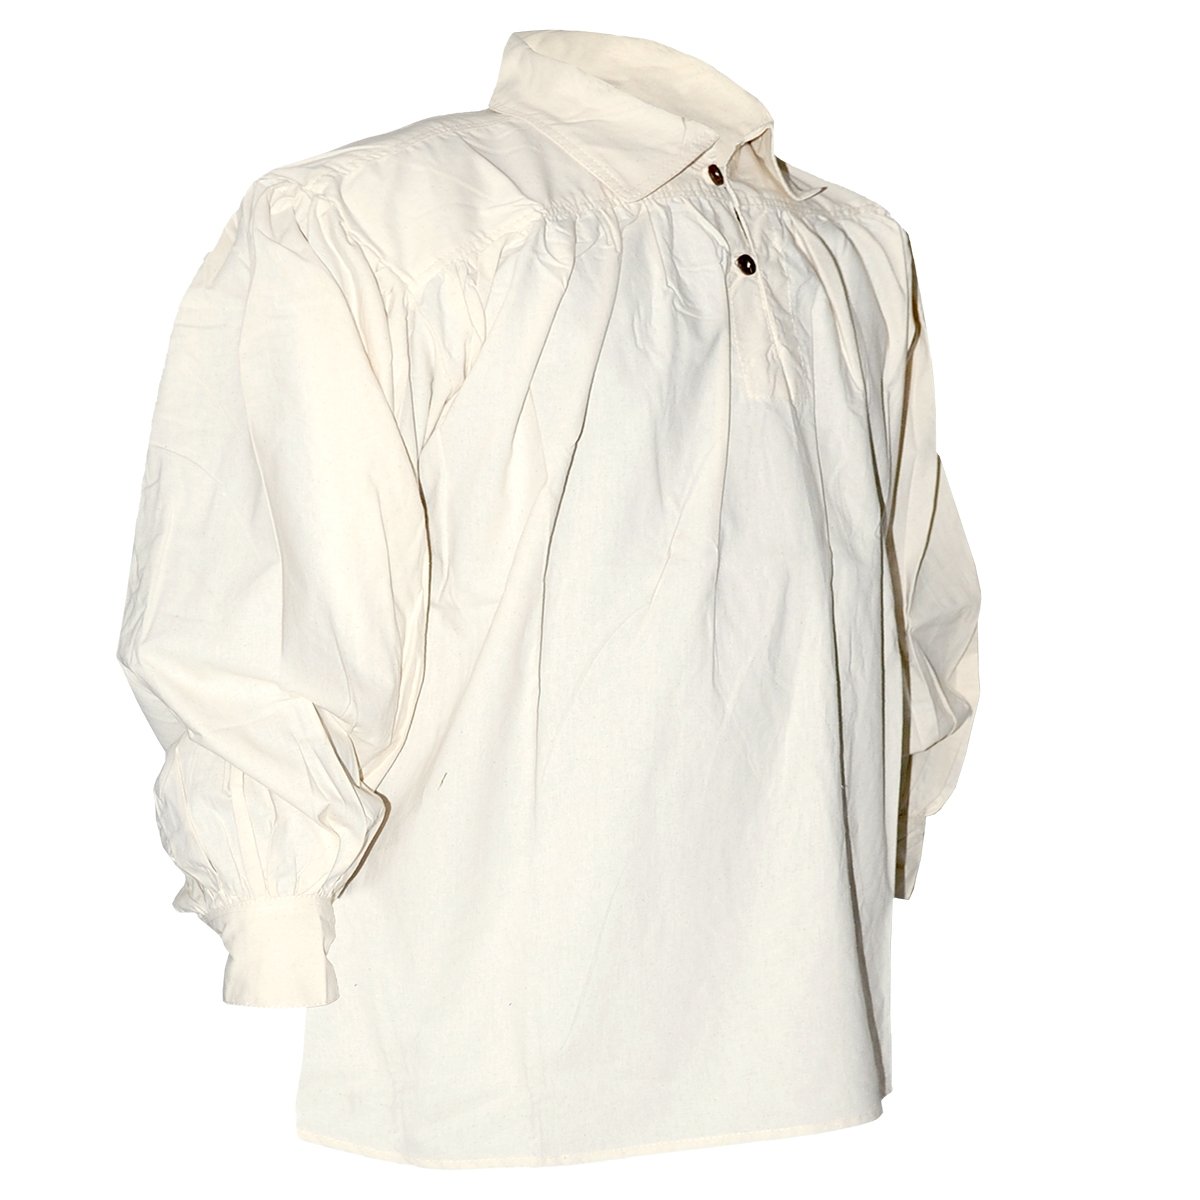 Cotton Shirt, Collared, Button Neck, Natural, Size XL